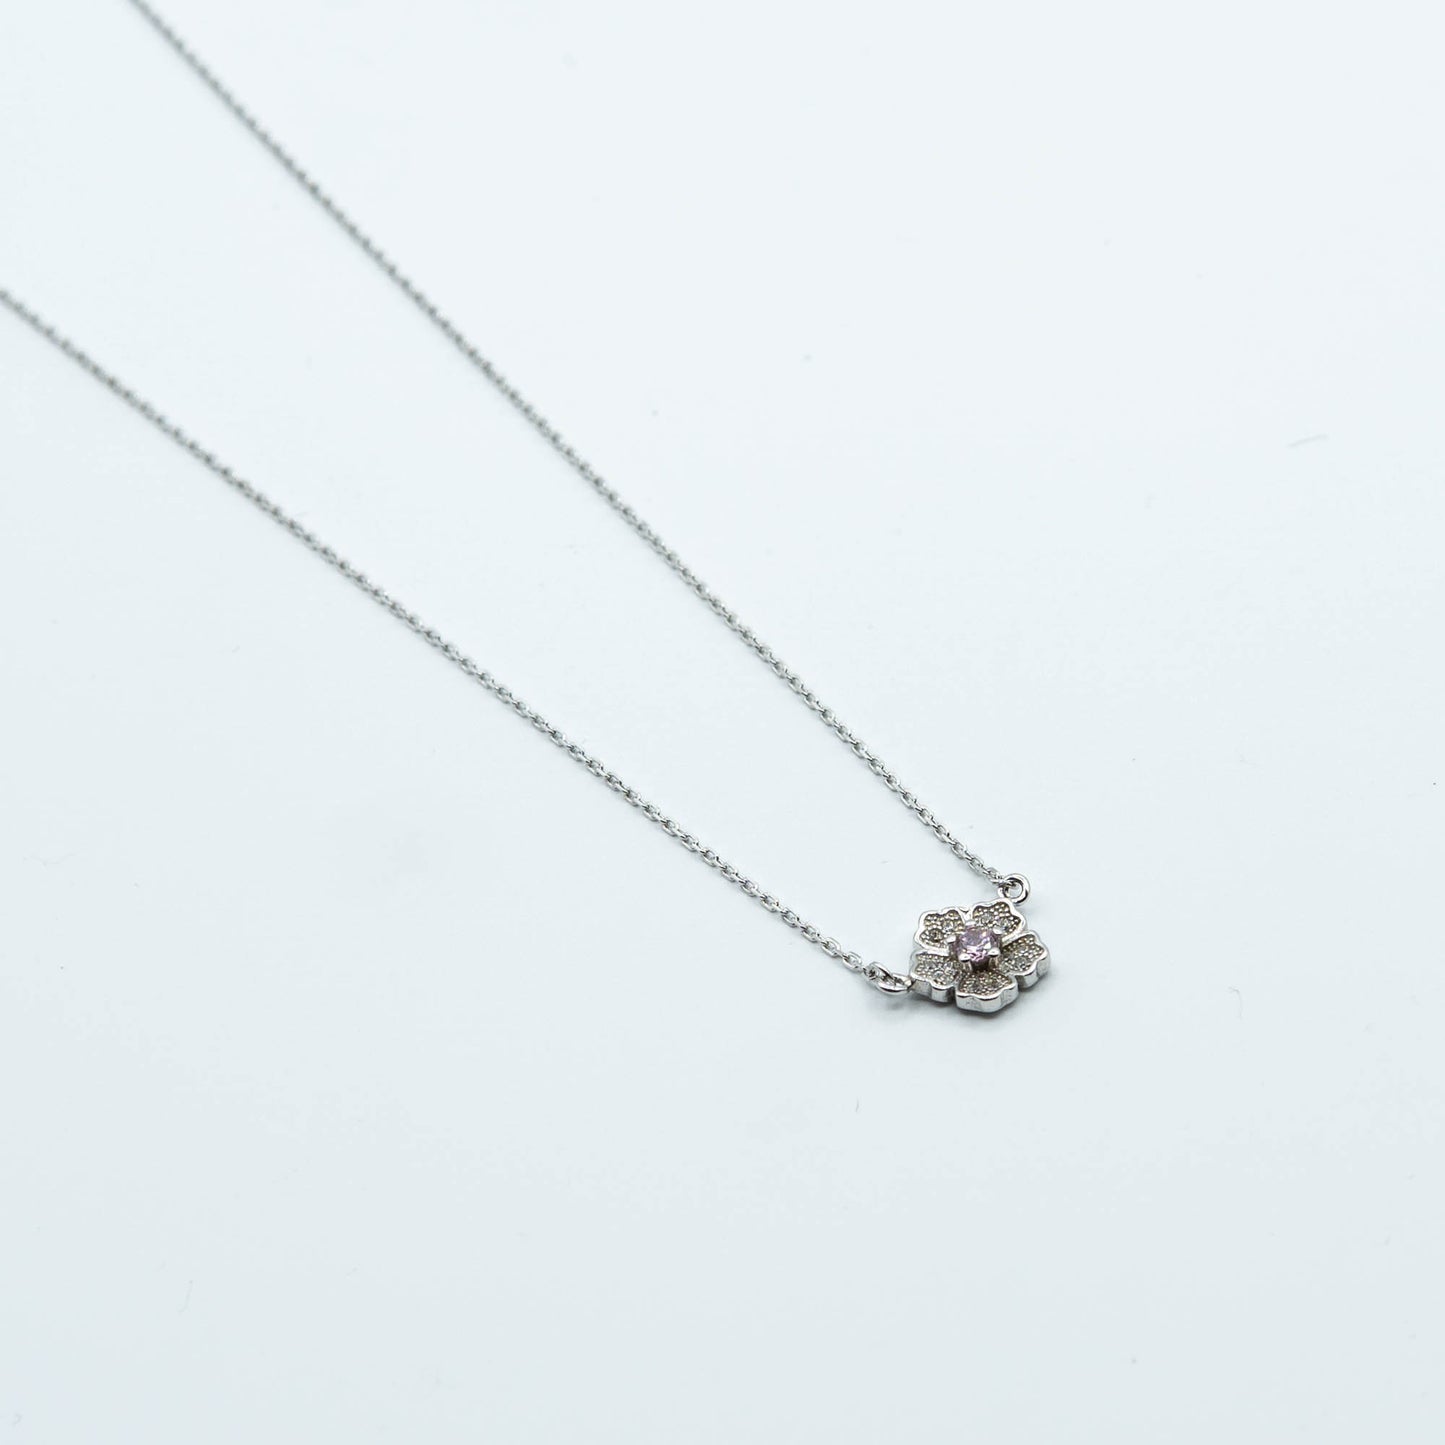 DK-925-455 - flower necklace